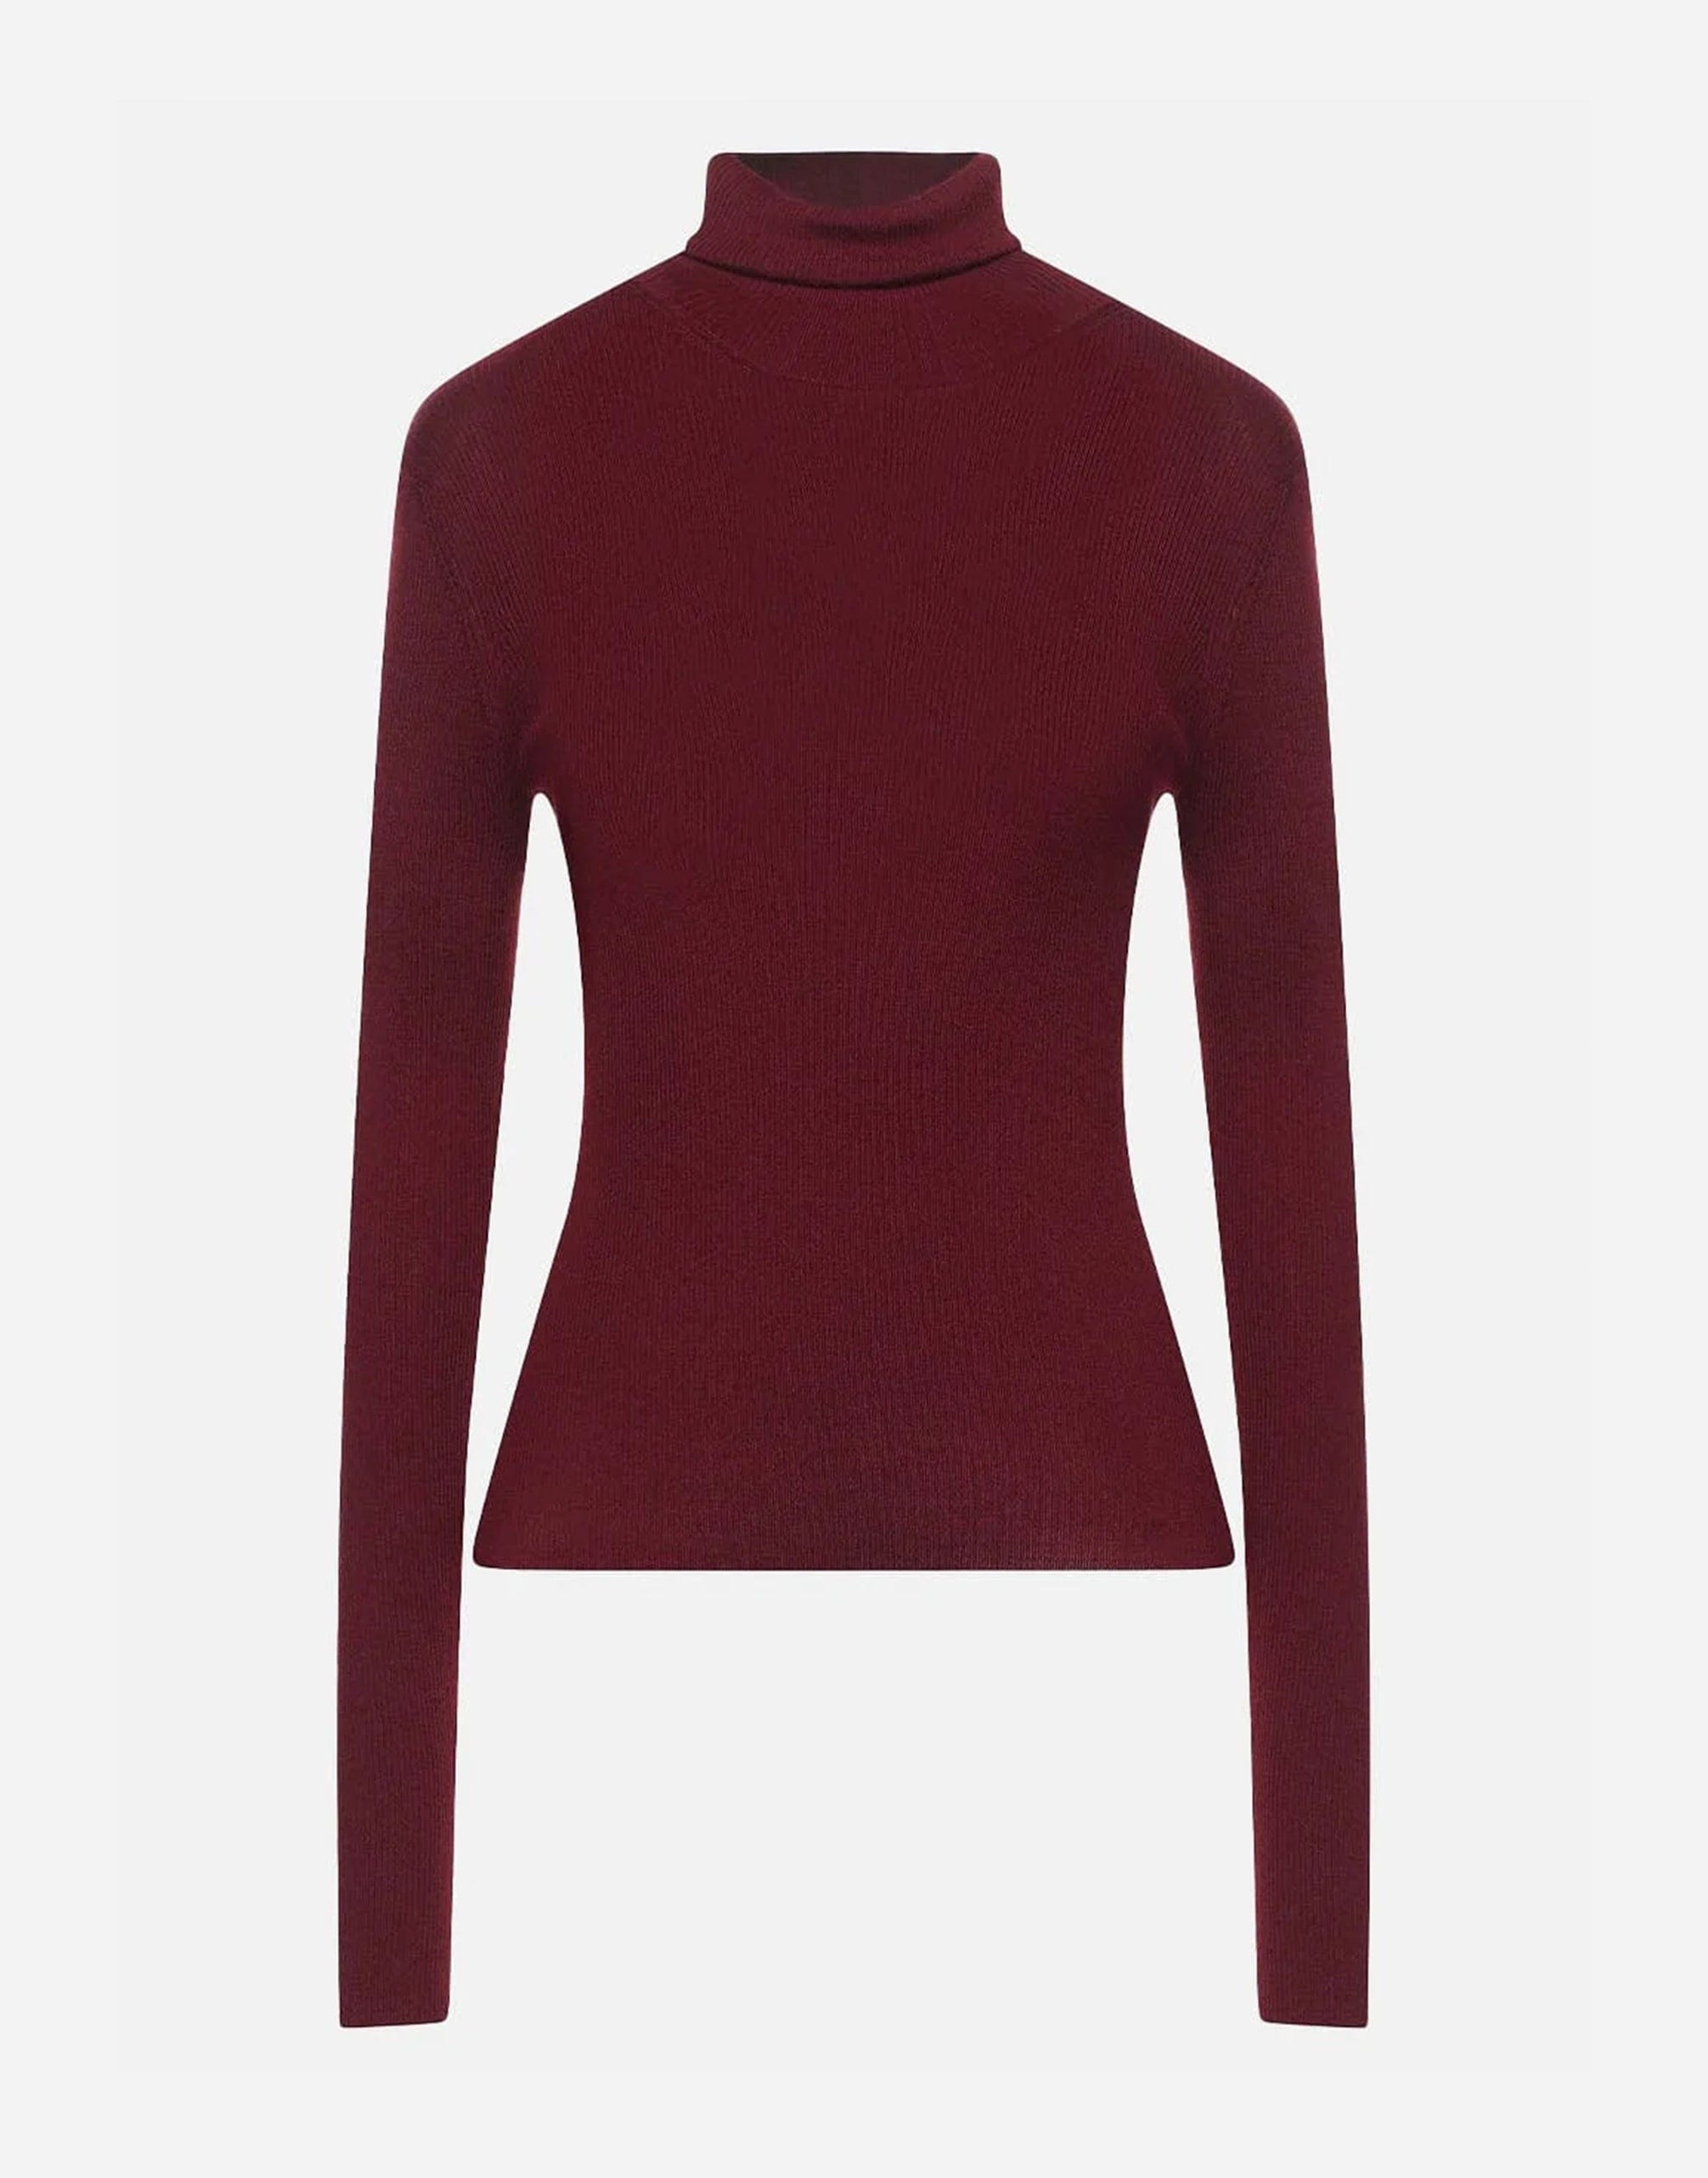 Dolce & Gabbana Cashmere Blend Turtleneck Sweater